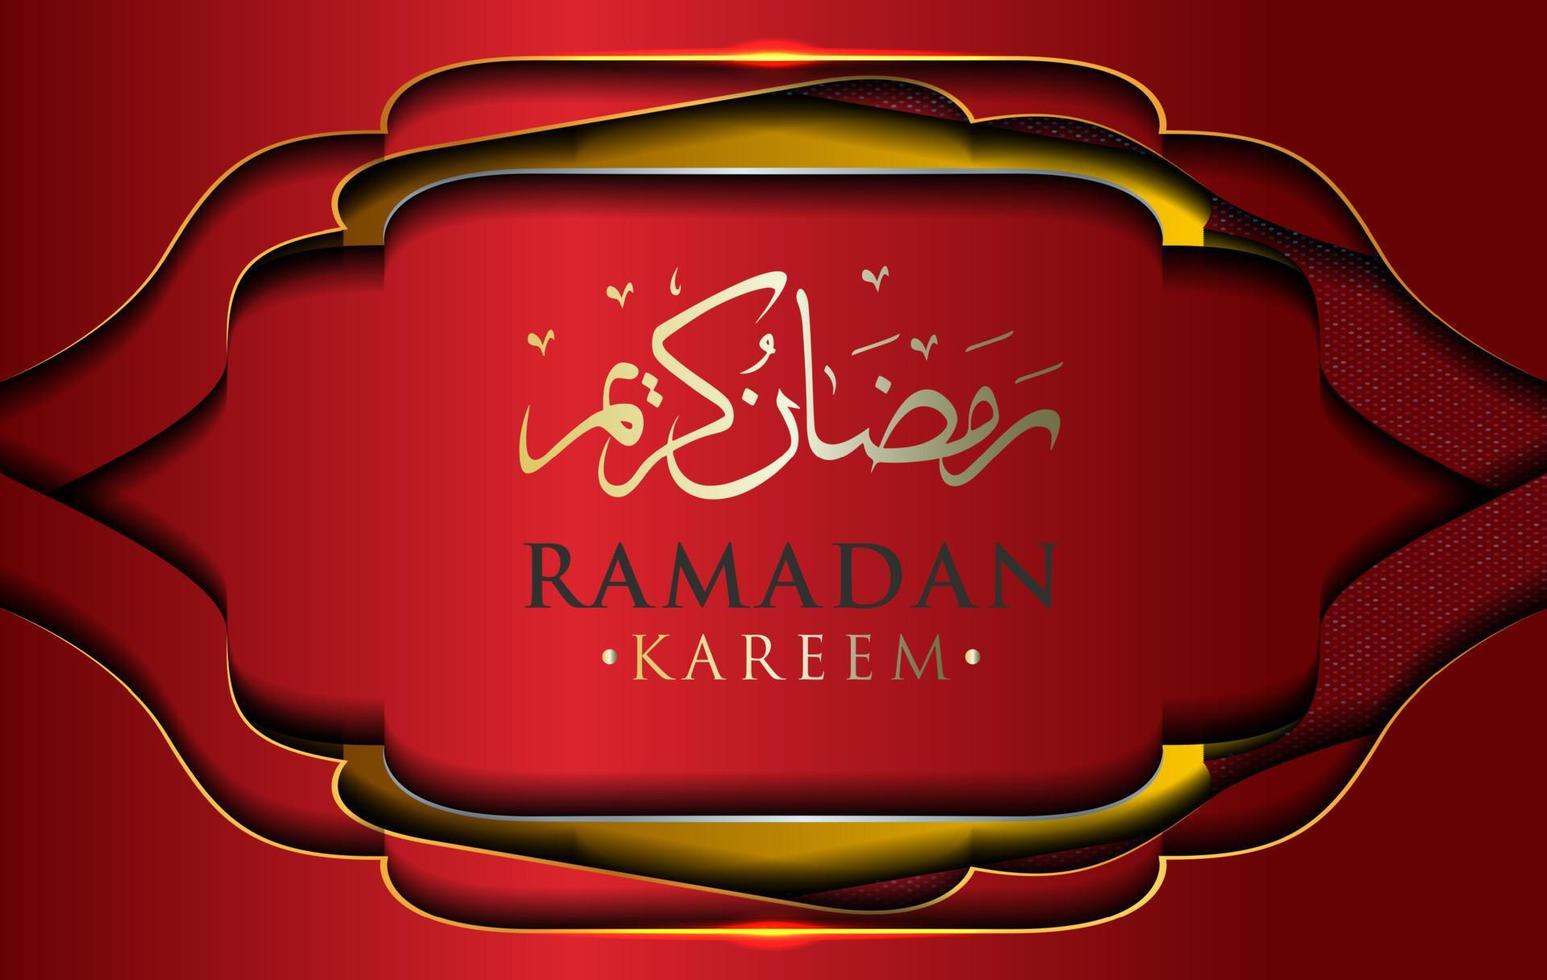 Ramadan Kareem in luxury style with Arabic calligraphy vector